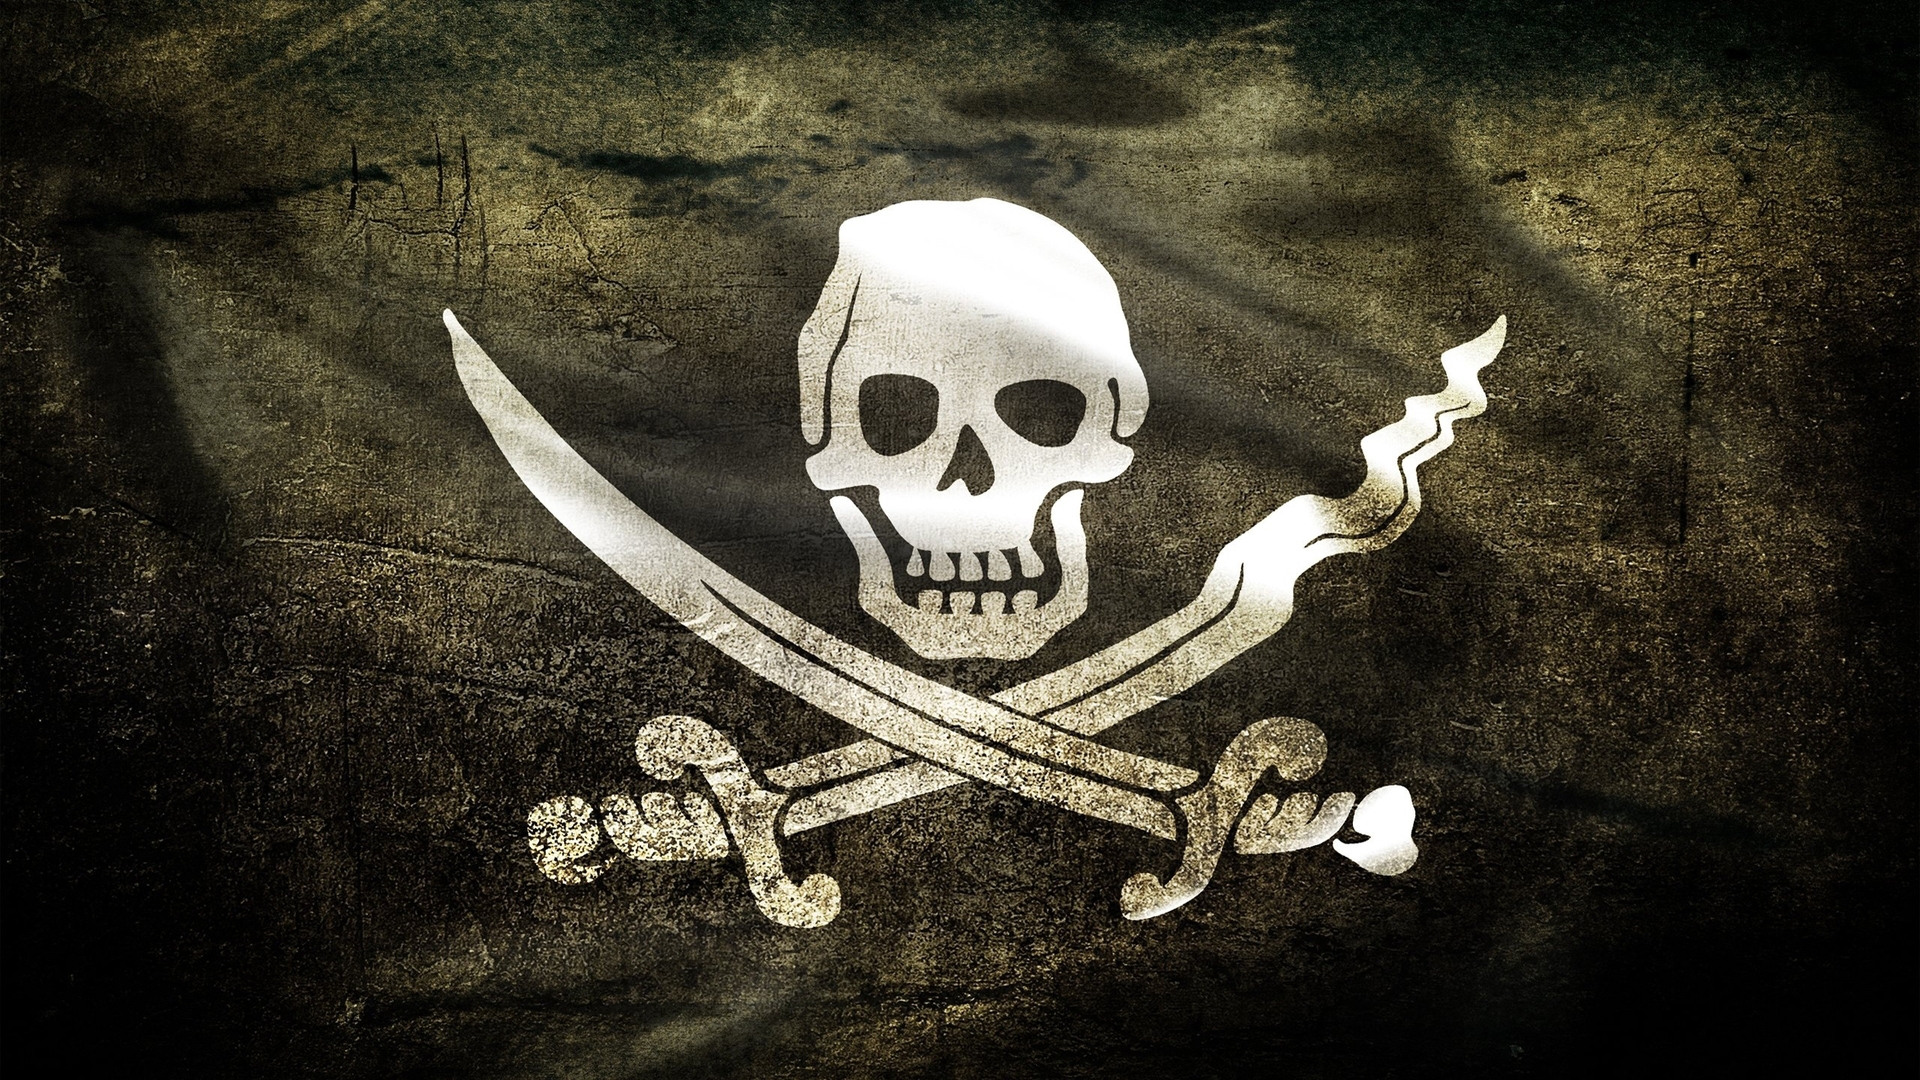 skulland bones, flag, background, texture, photo, skull and bones texture background, pirate flag